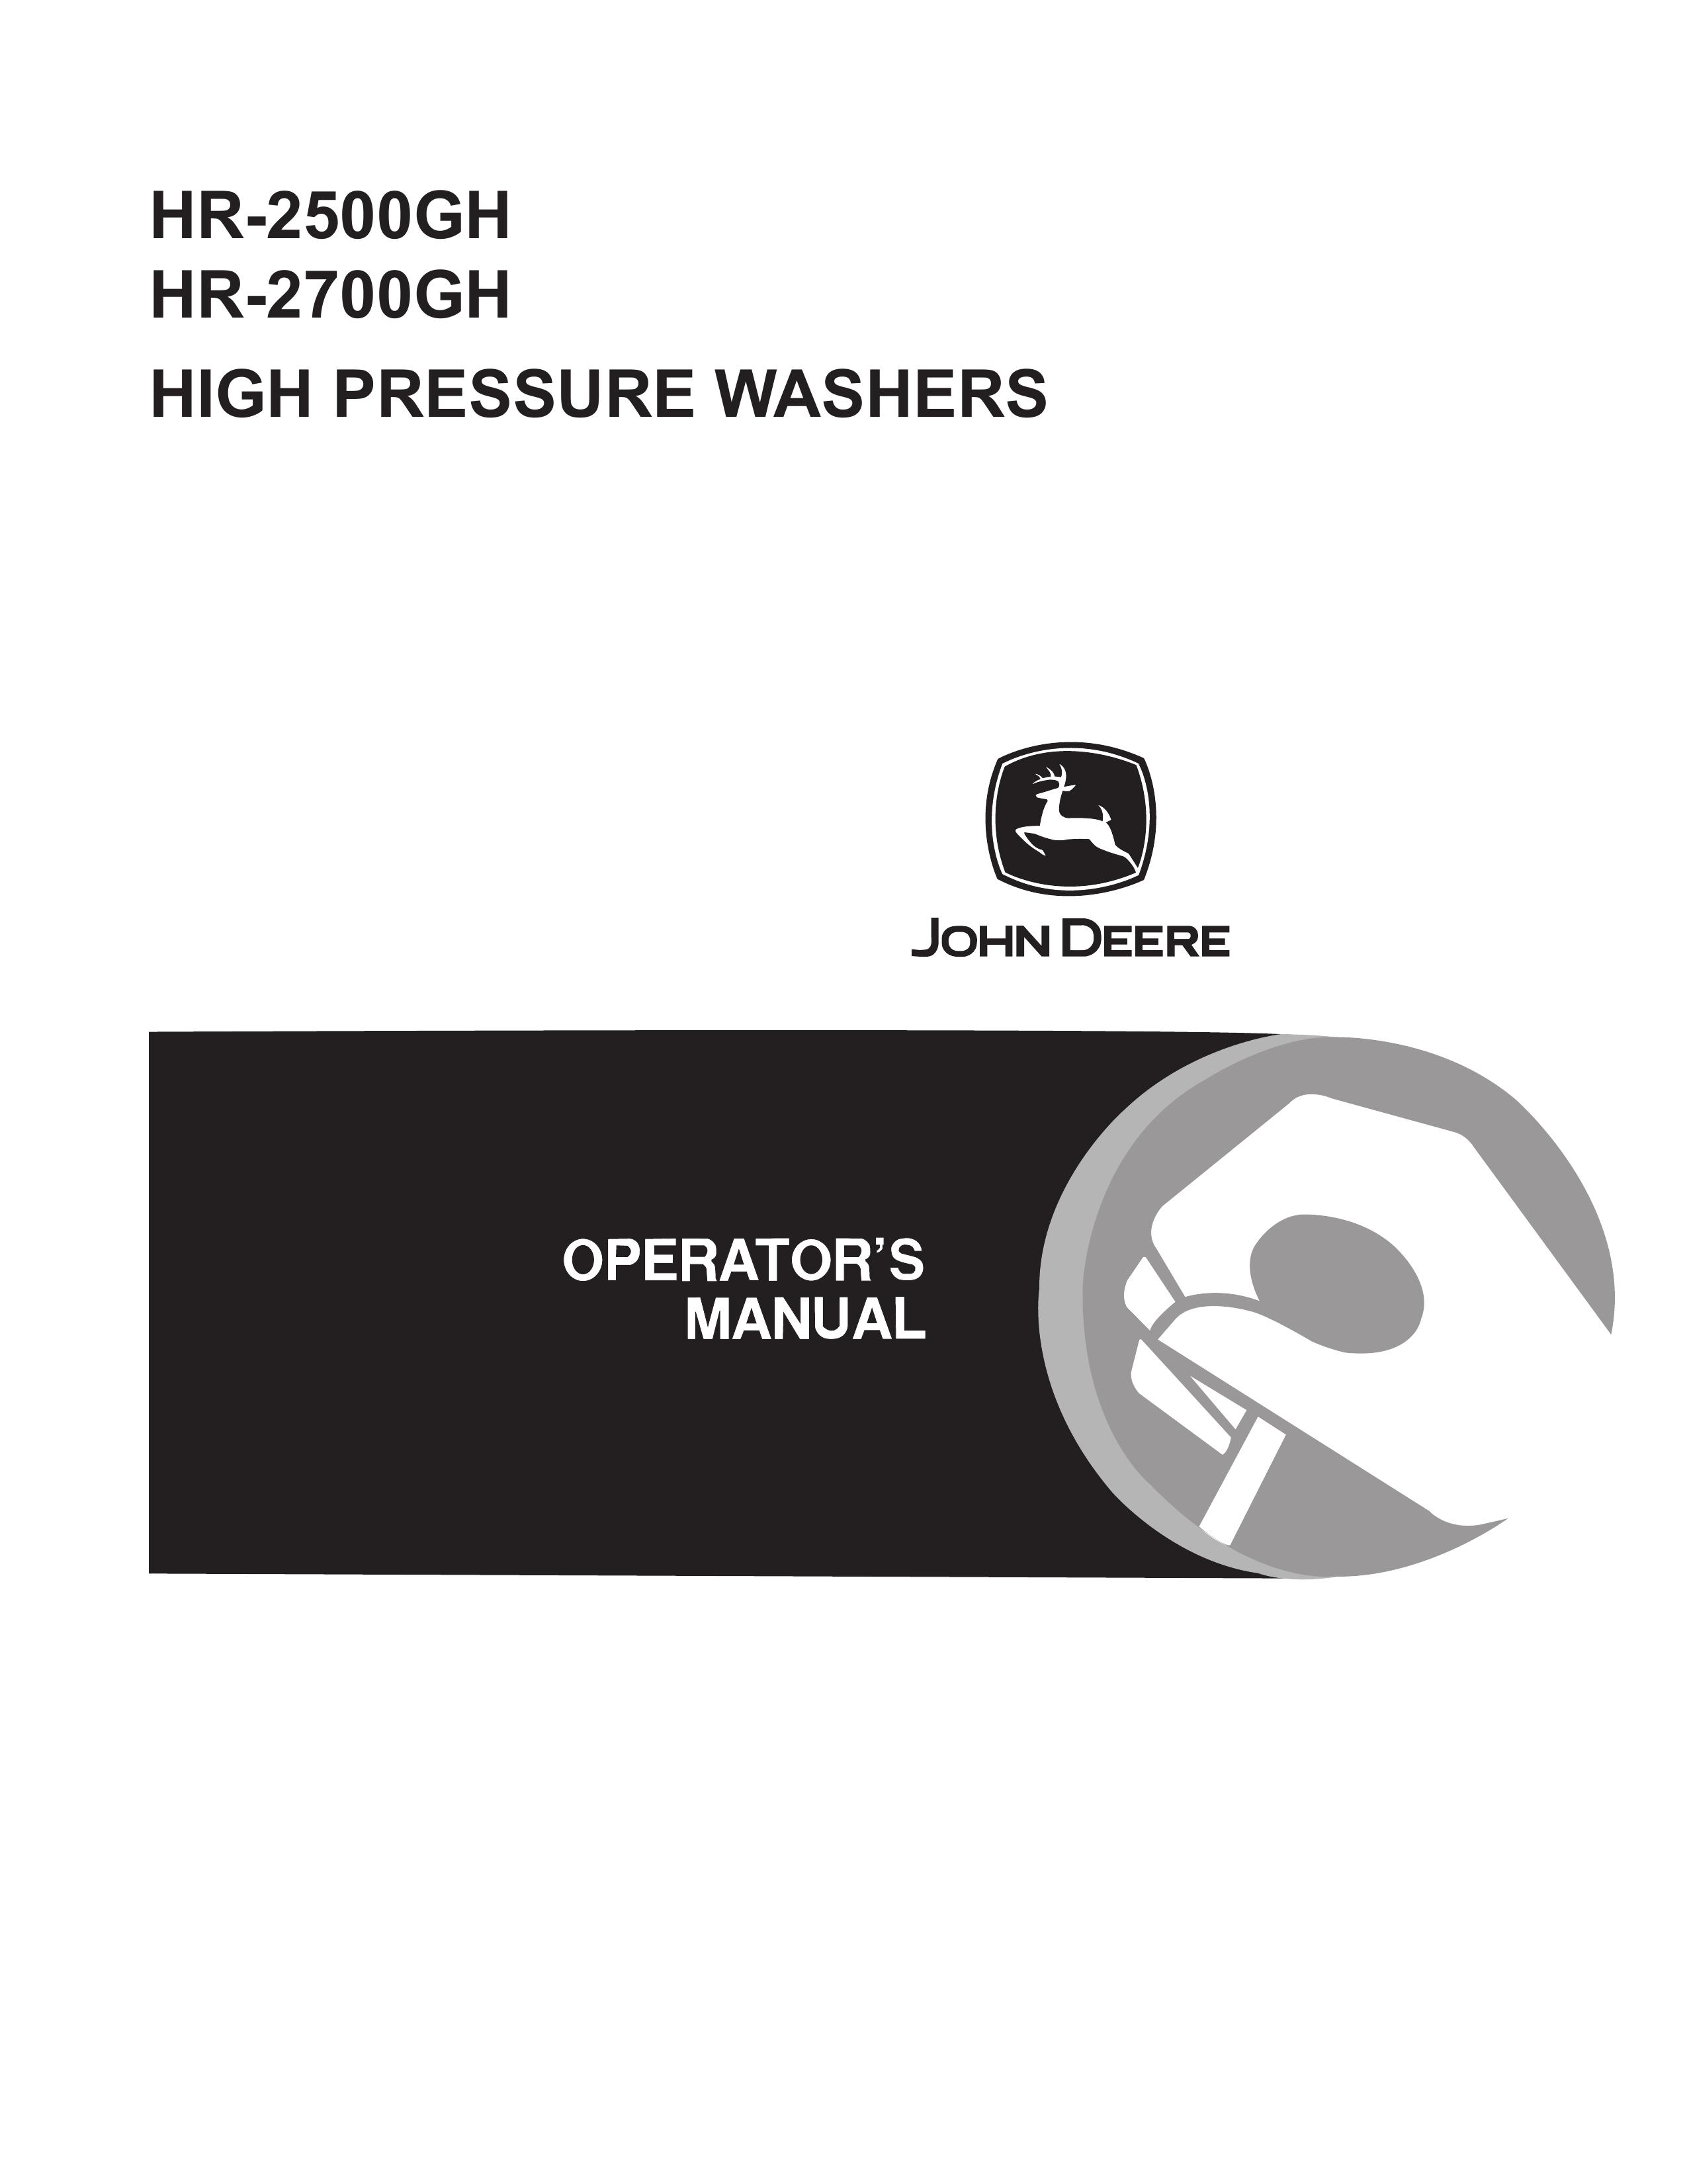 John Deere HR-2500GH Pressure Washer User Manual